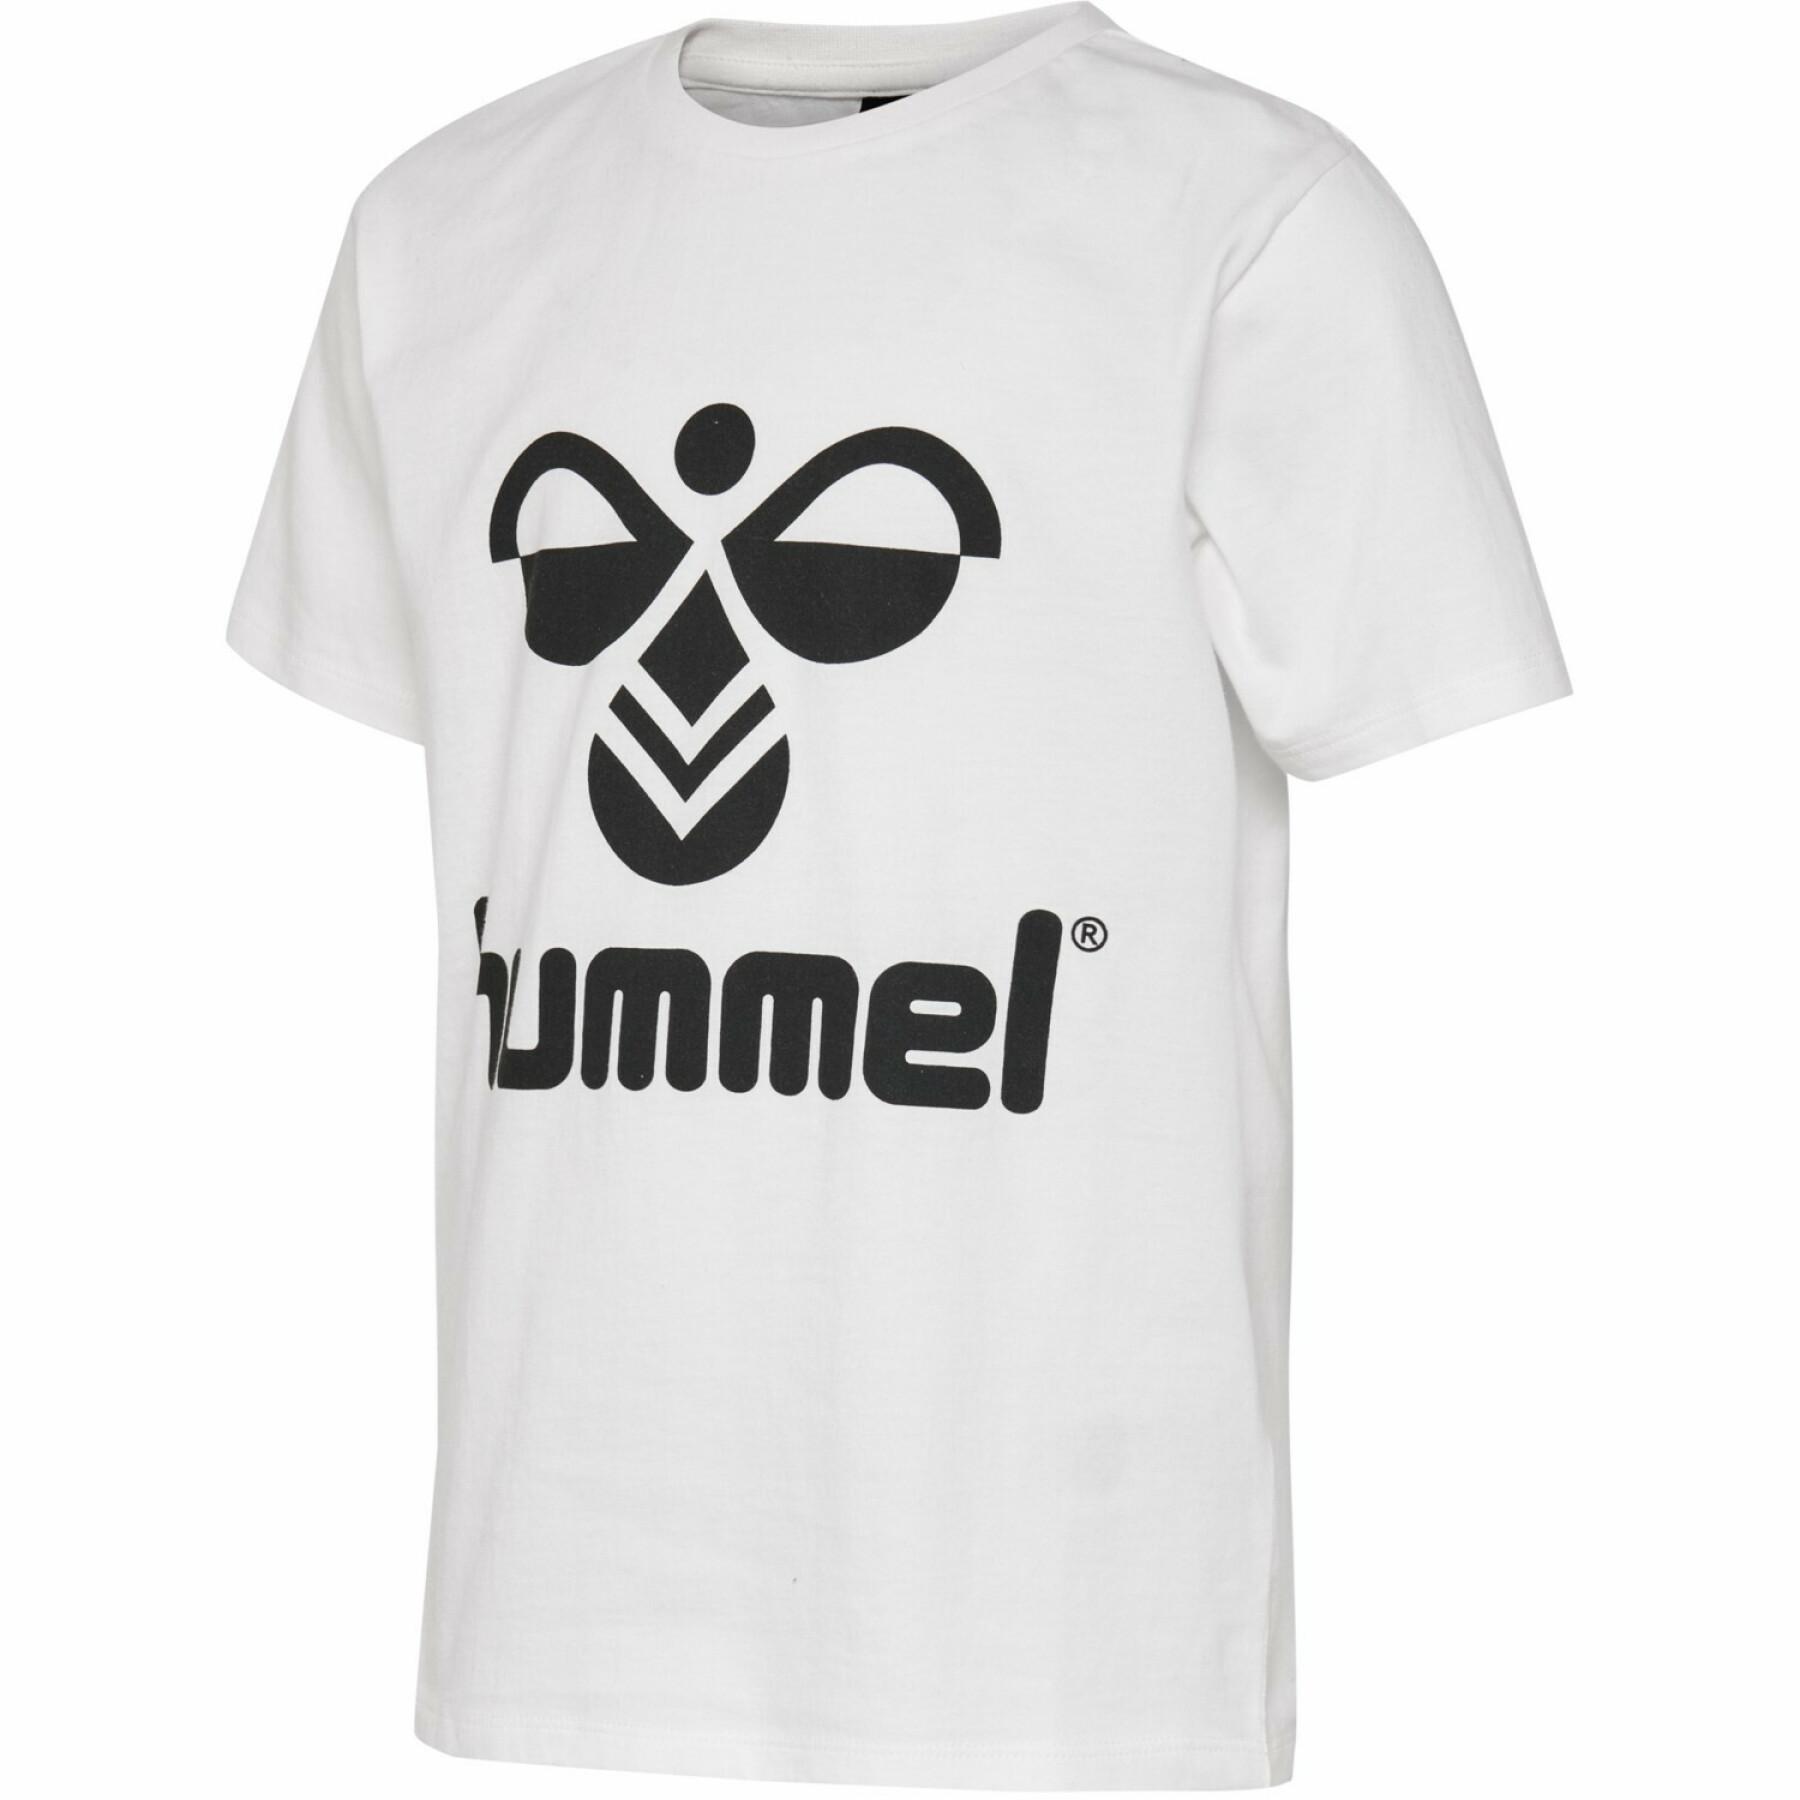 Kid\'s T-shirt Hummel hmltres - T-shirts et polo shirts - Women\'s volleyball  wear - Volleyball wear